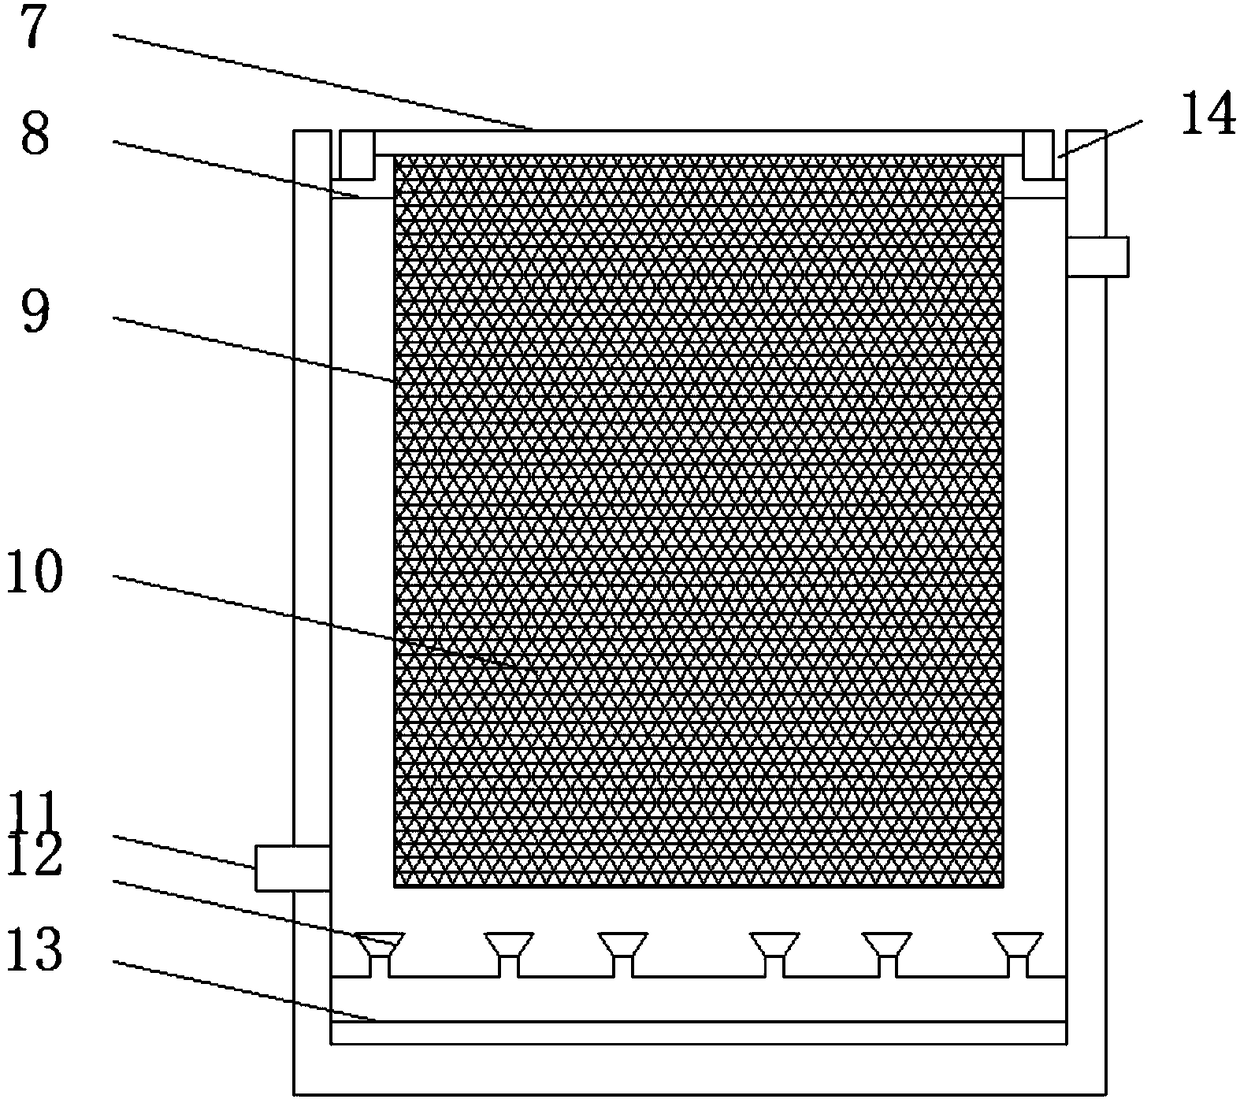 Enhanced coupling biofilm reactor